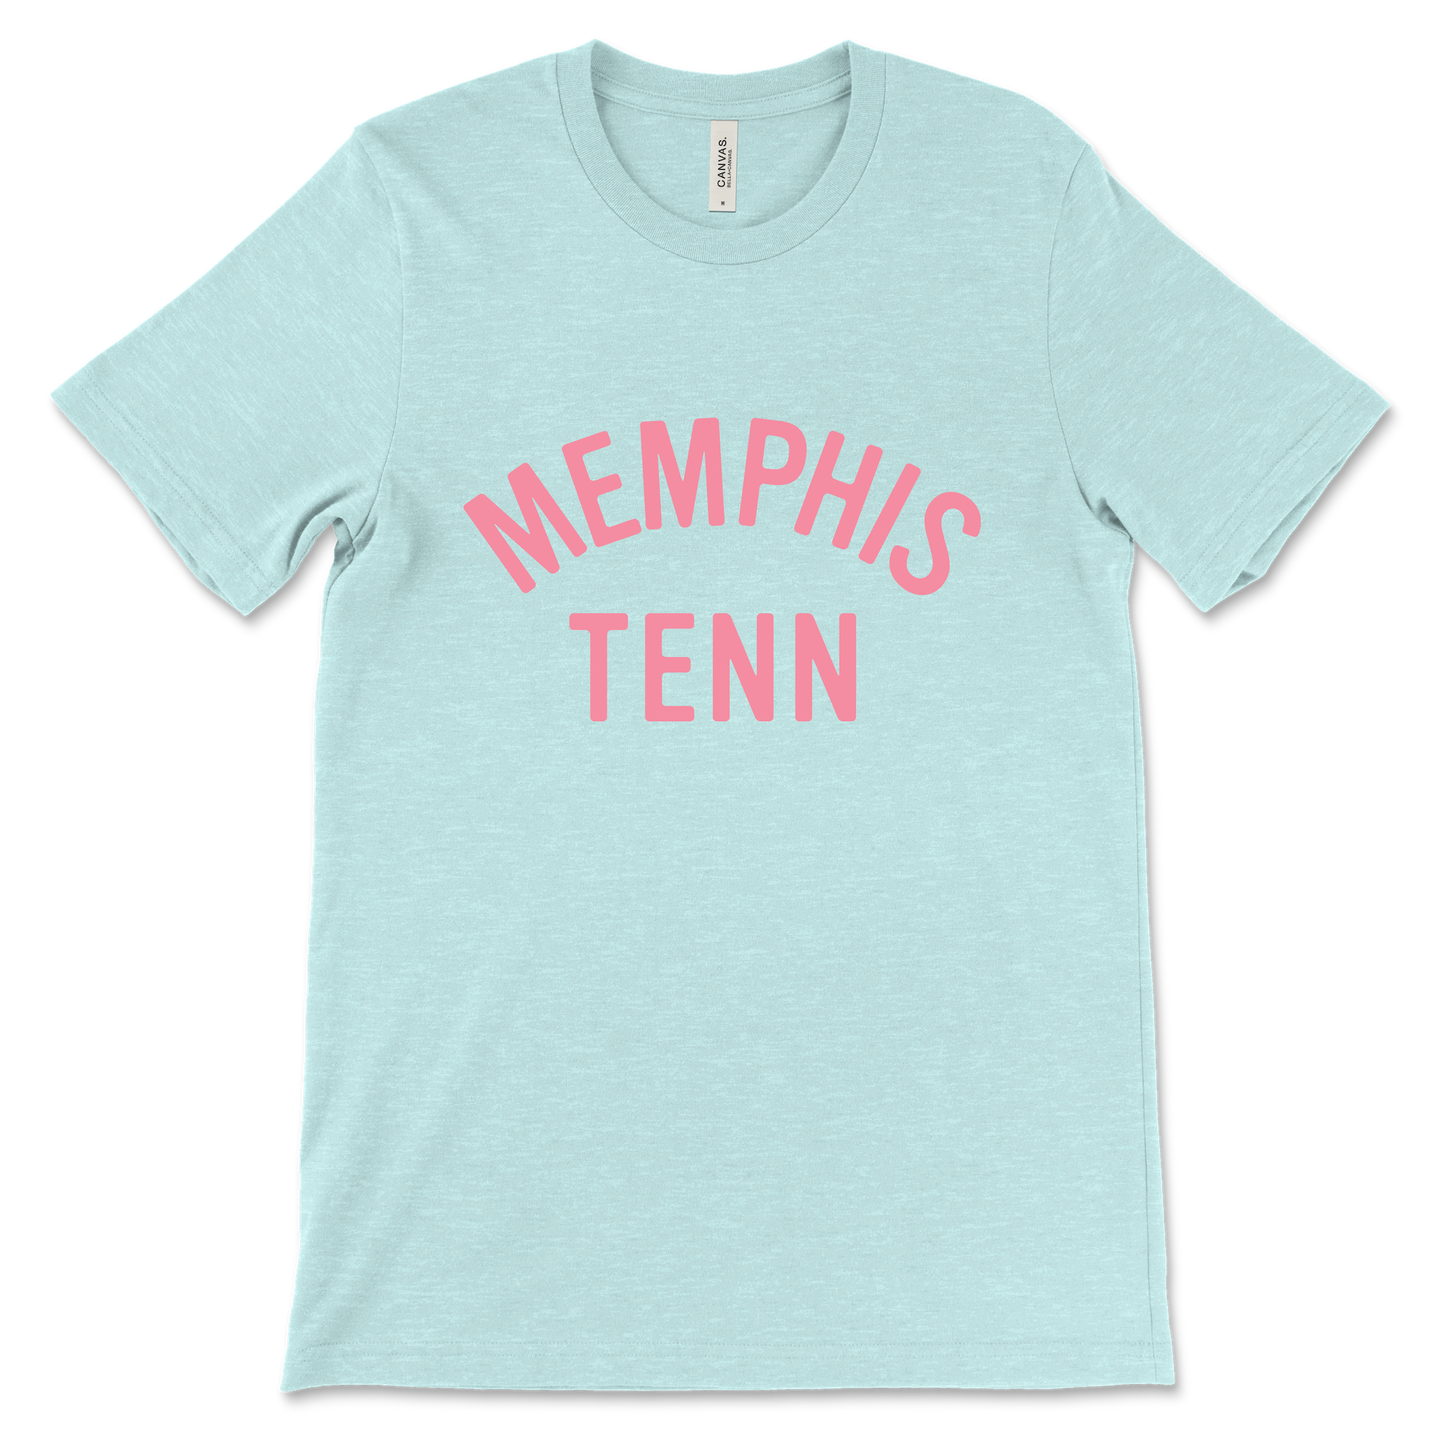 Light blue MEMPHIS TENN TEE with "Choose901 Memphis" text in pink.